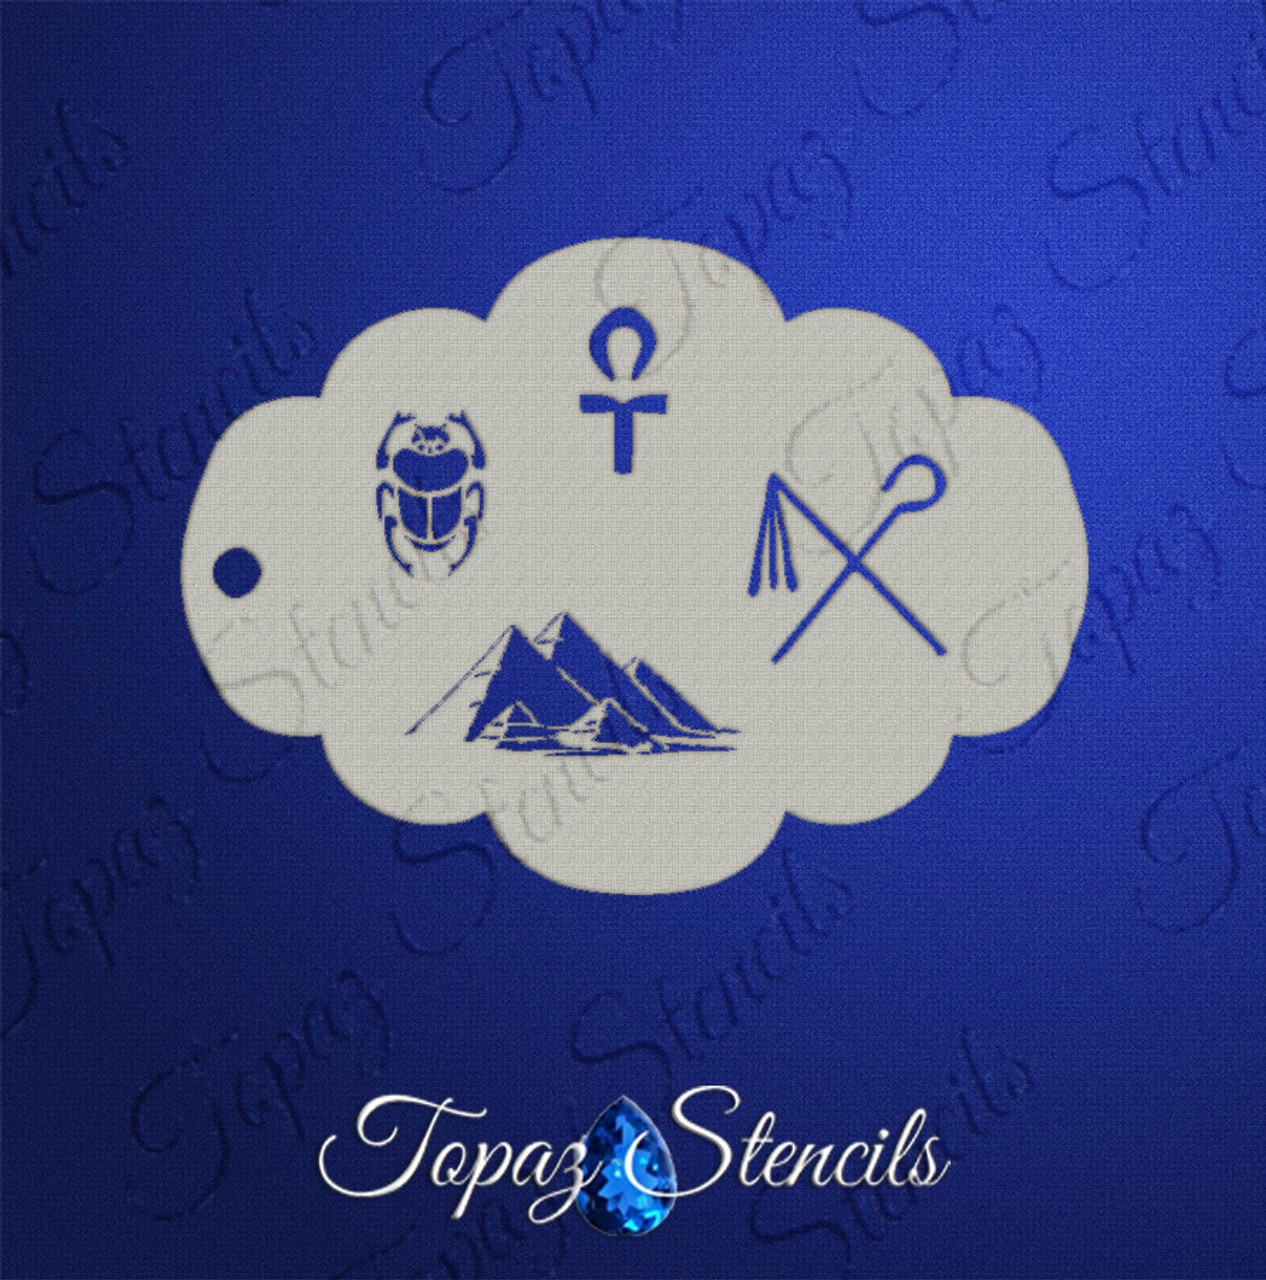 Egyptian Elements - Topaz Stencils